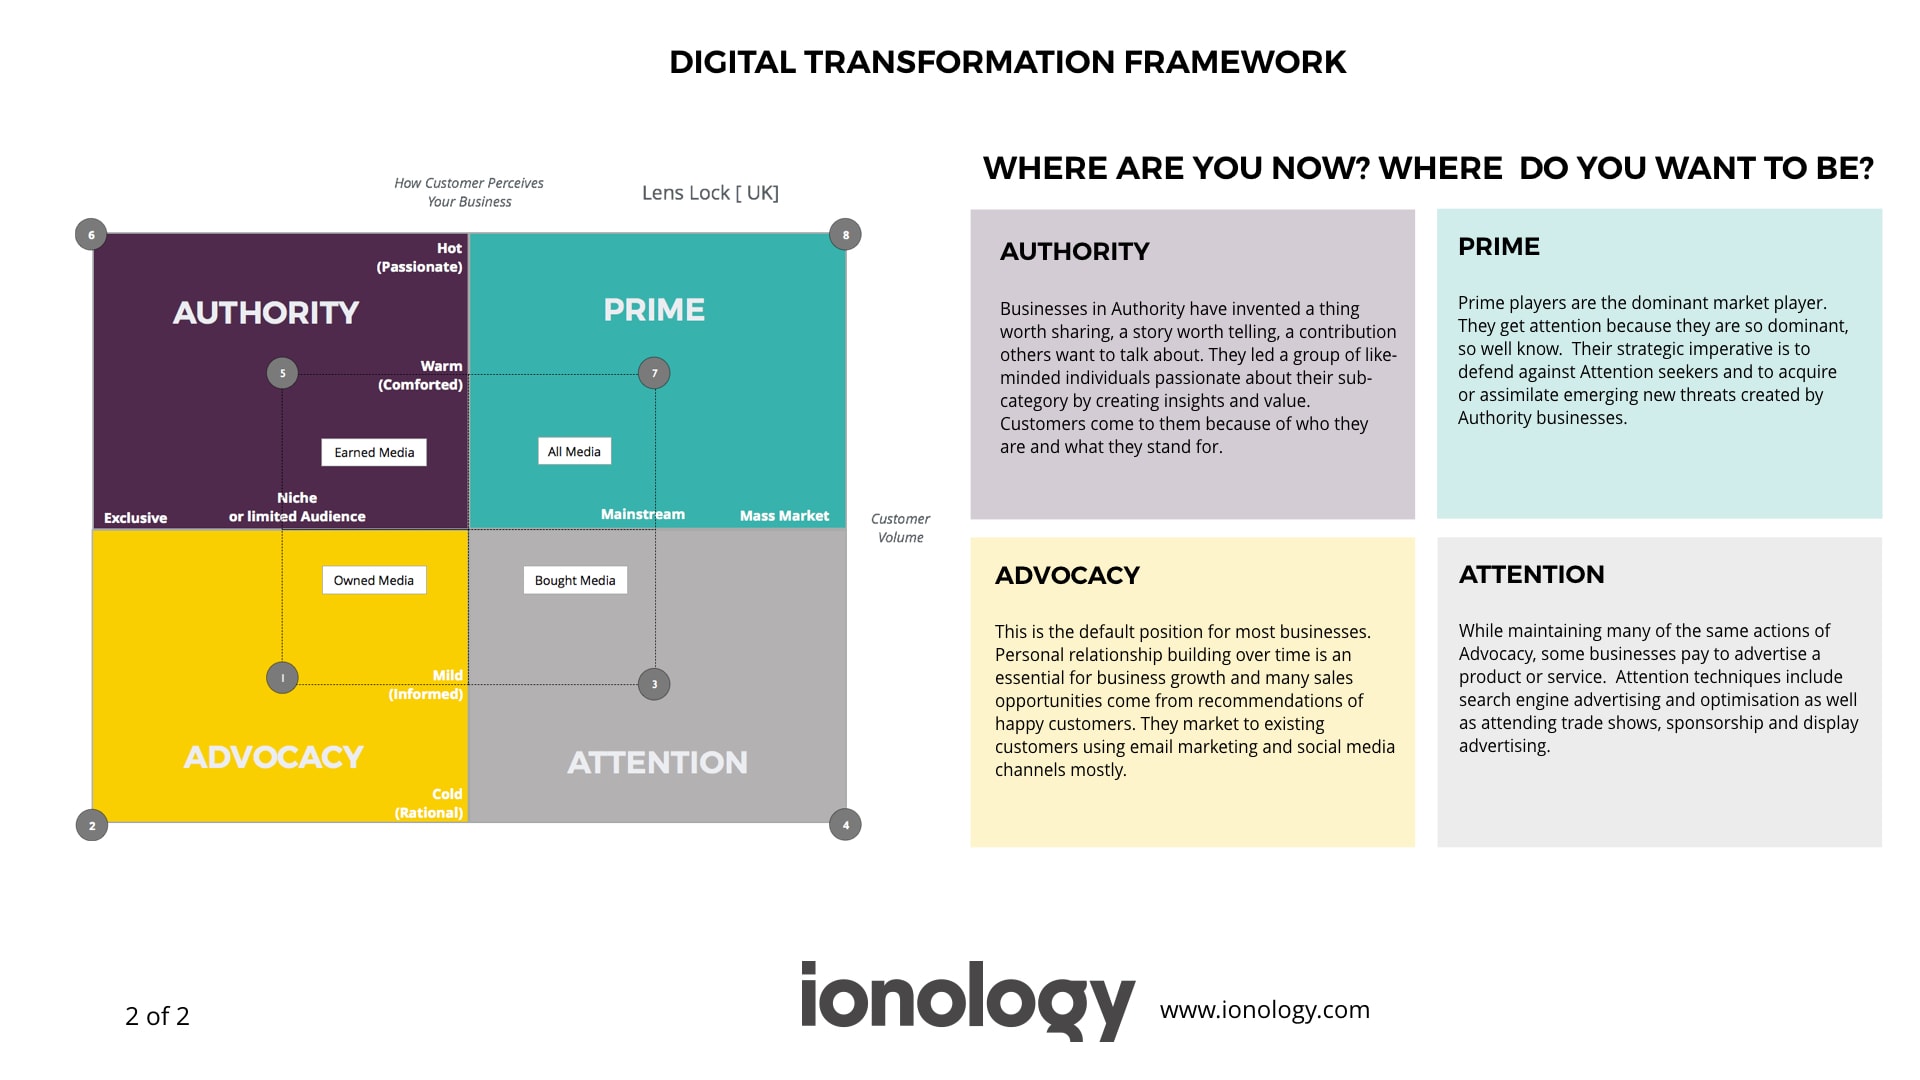 Ionology Digital Transformation Framework - Part 2 of 2